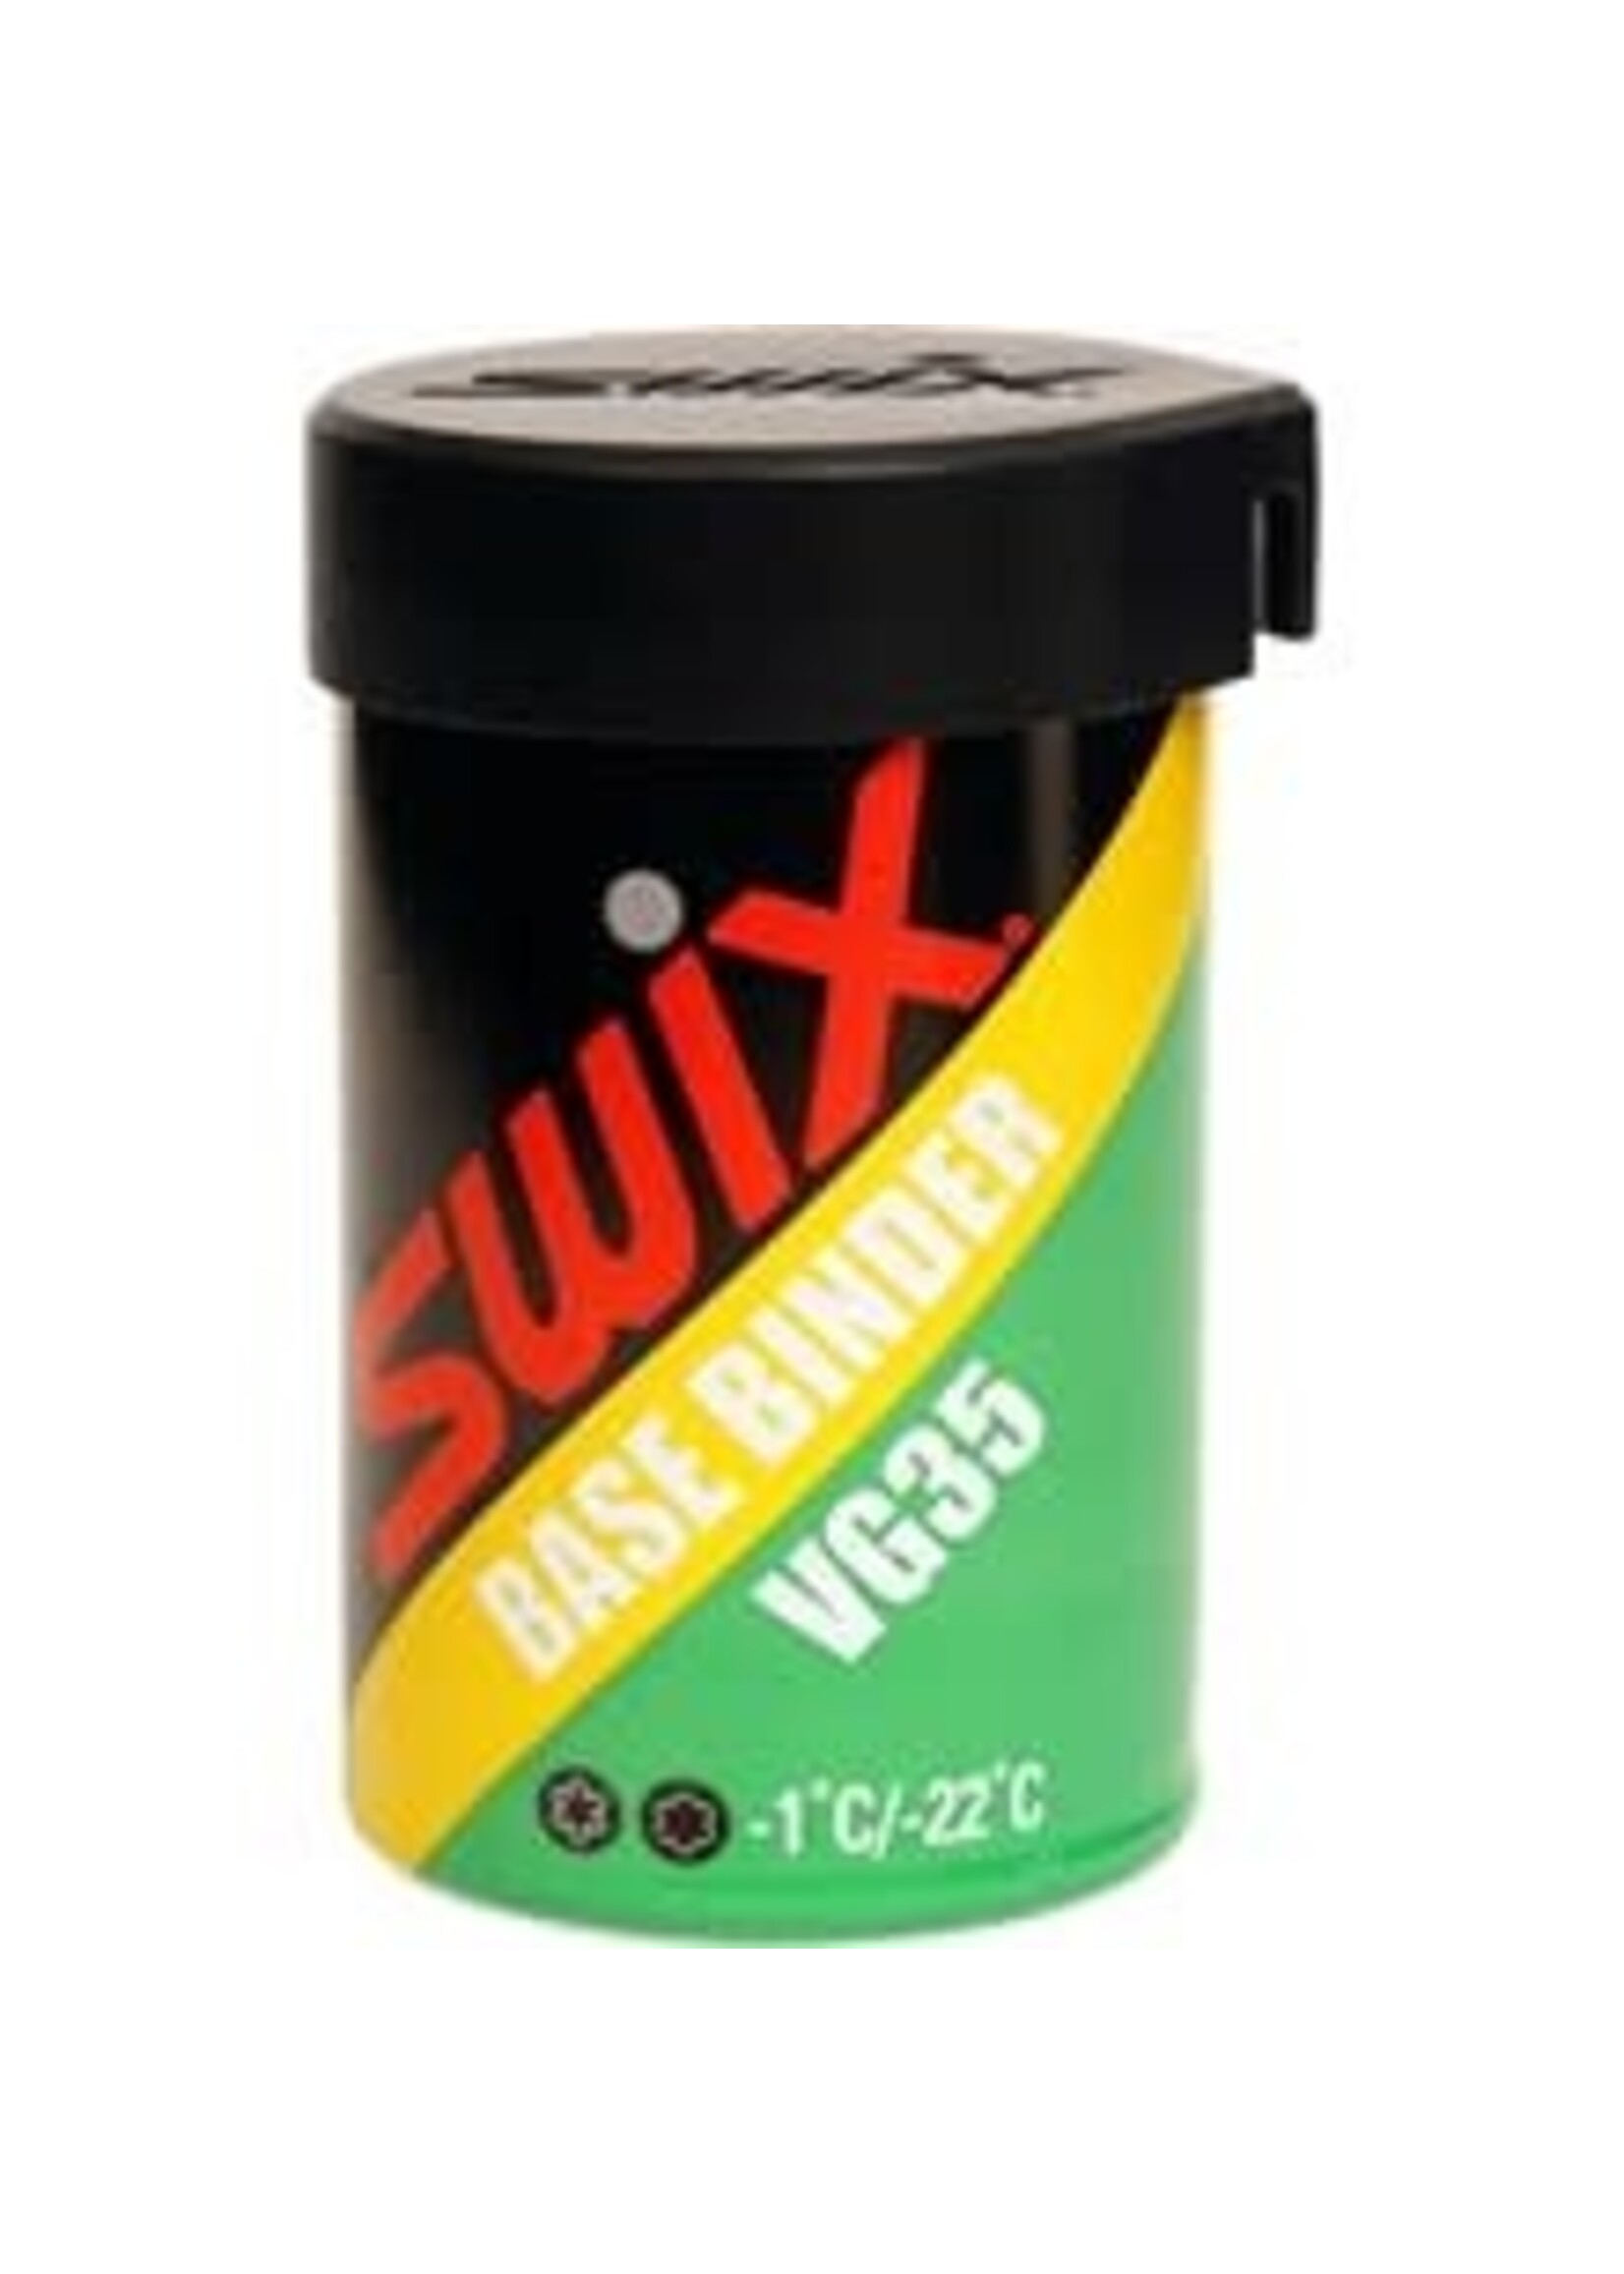 Swix Swix Base Binder VG35- 45g